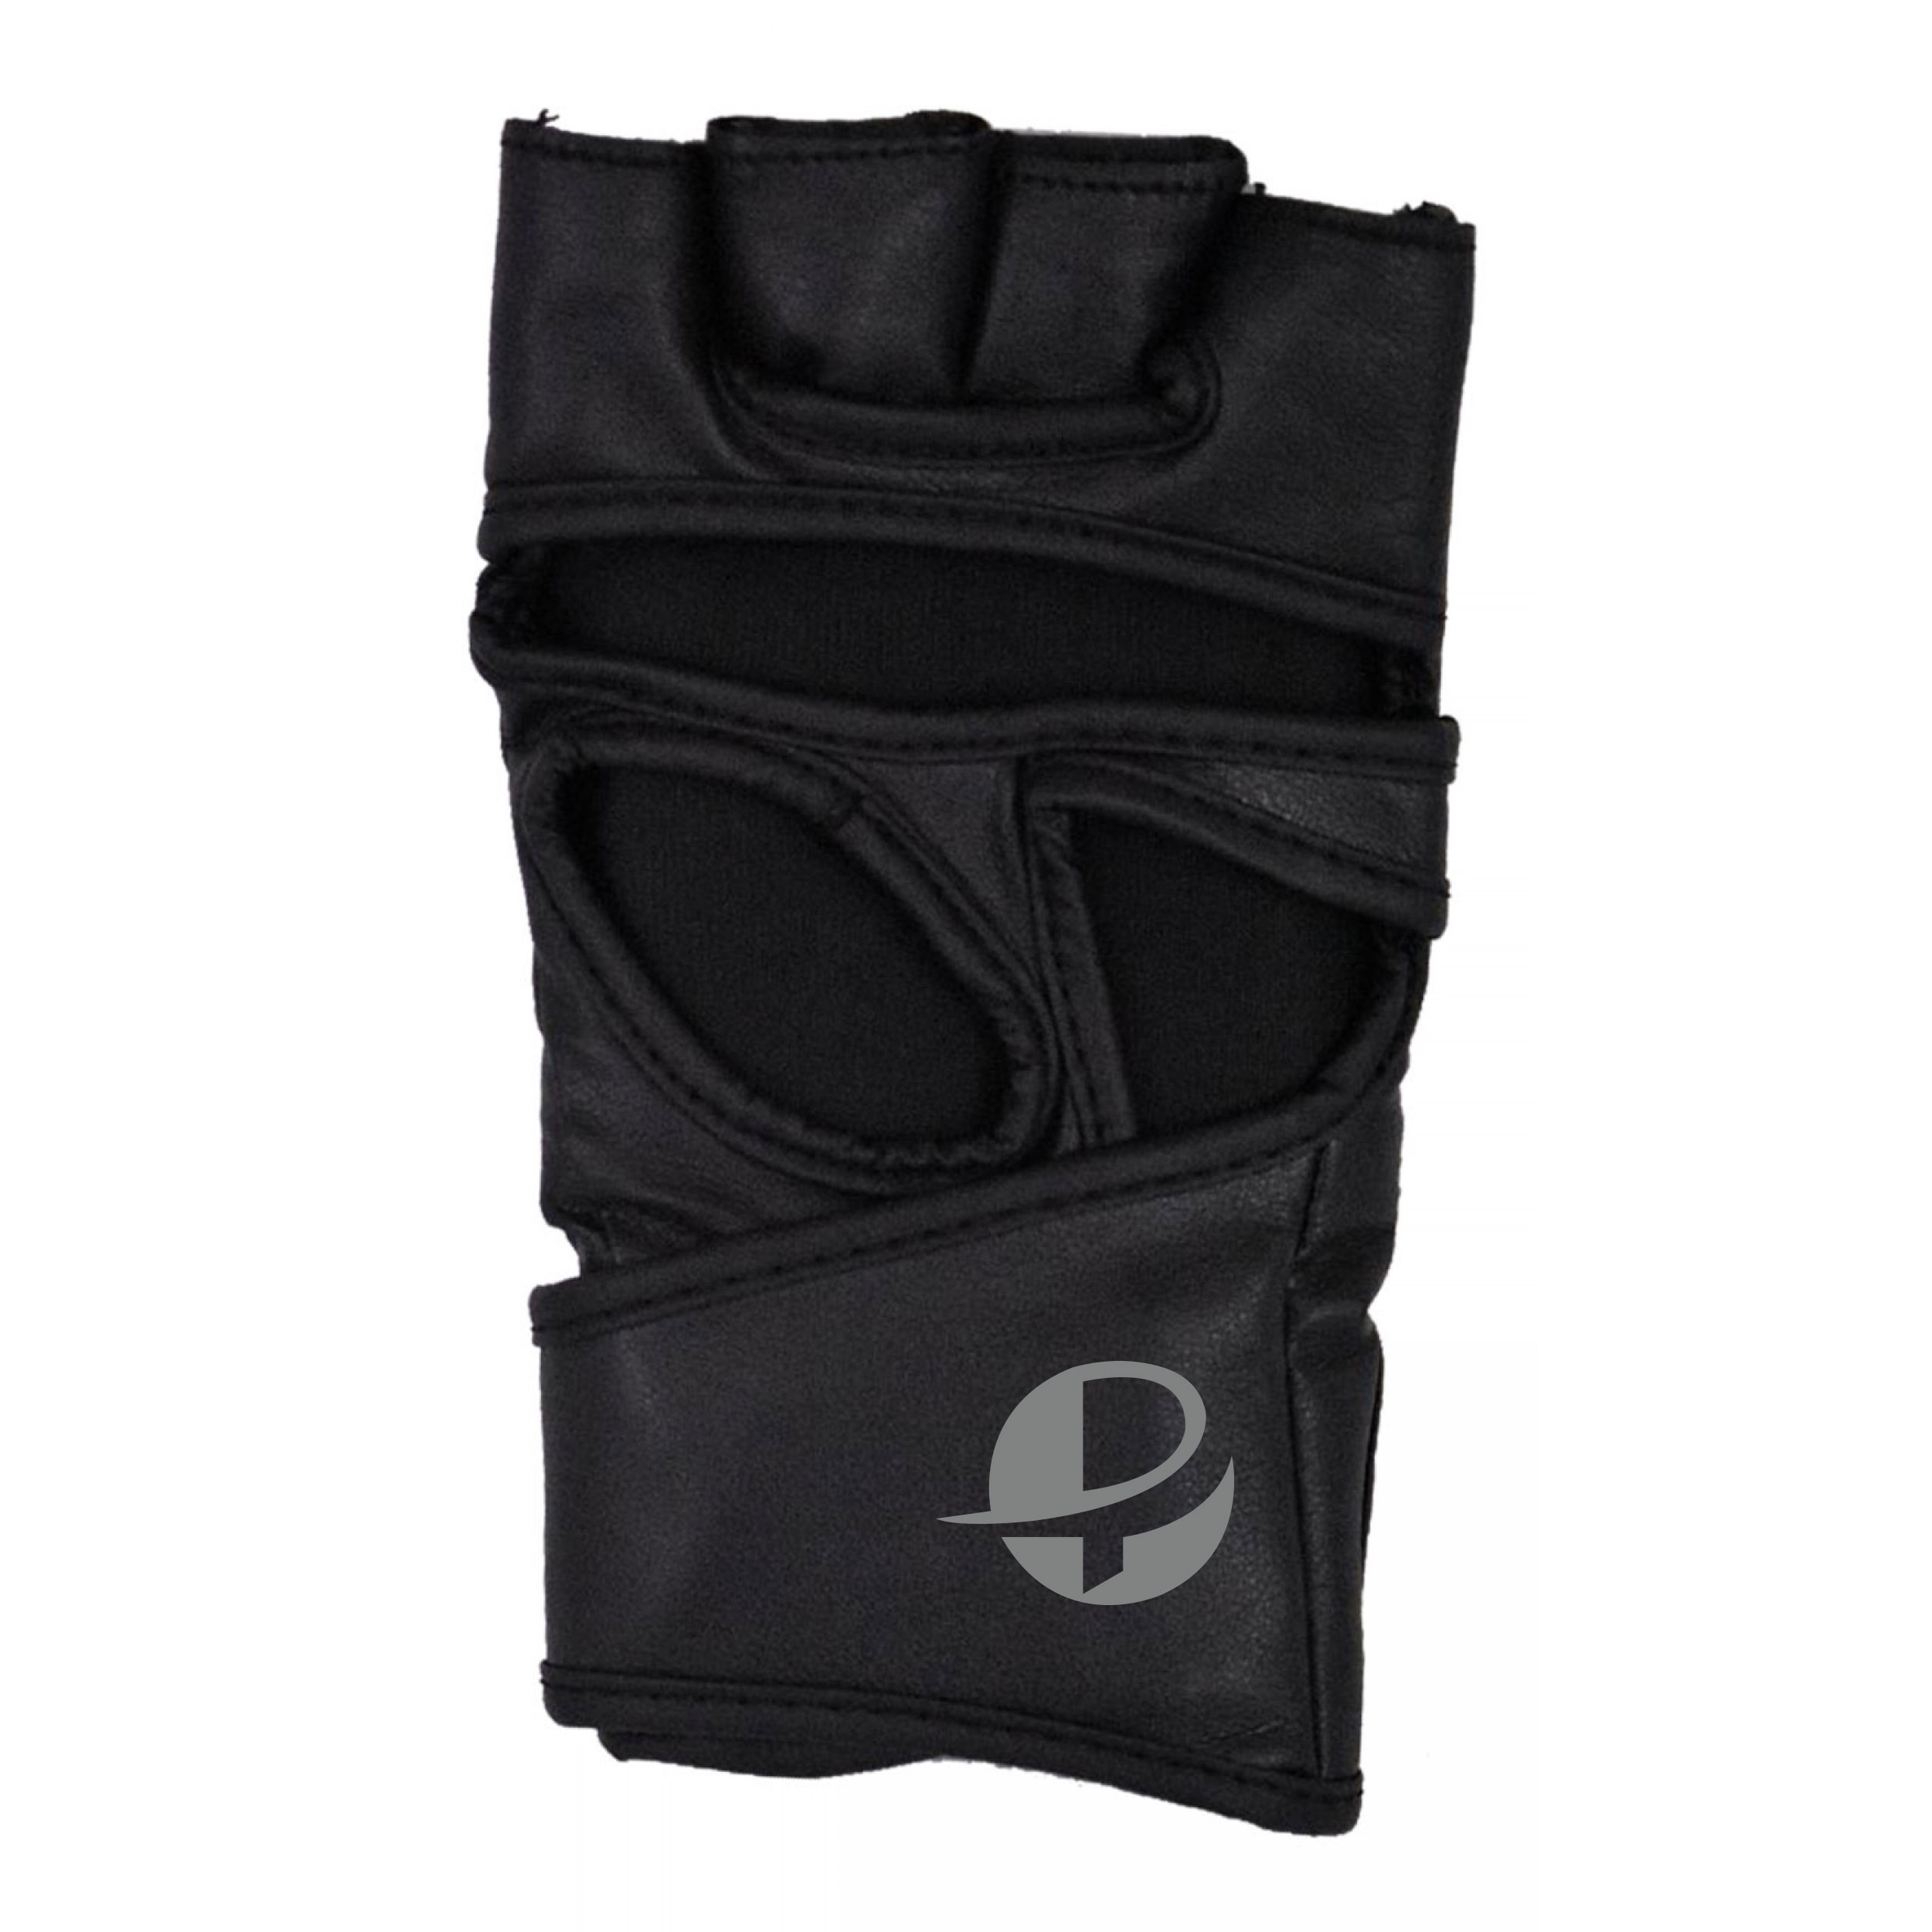 PMG MMA Gloves (All Black)